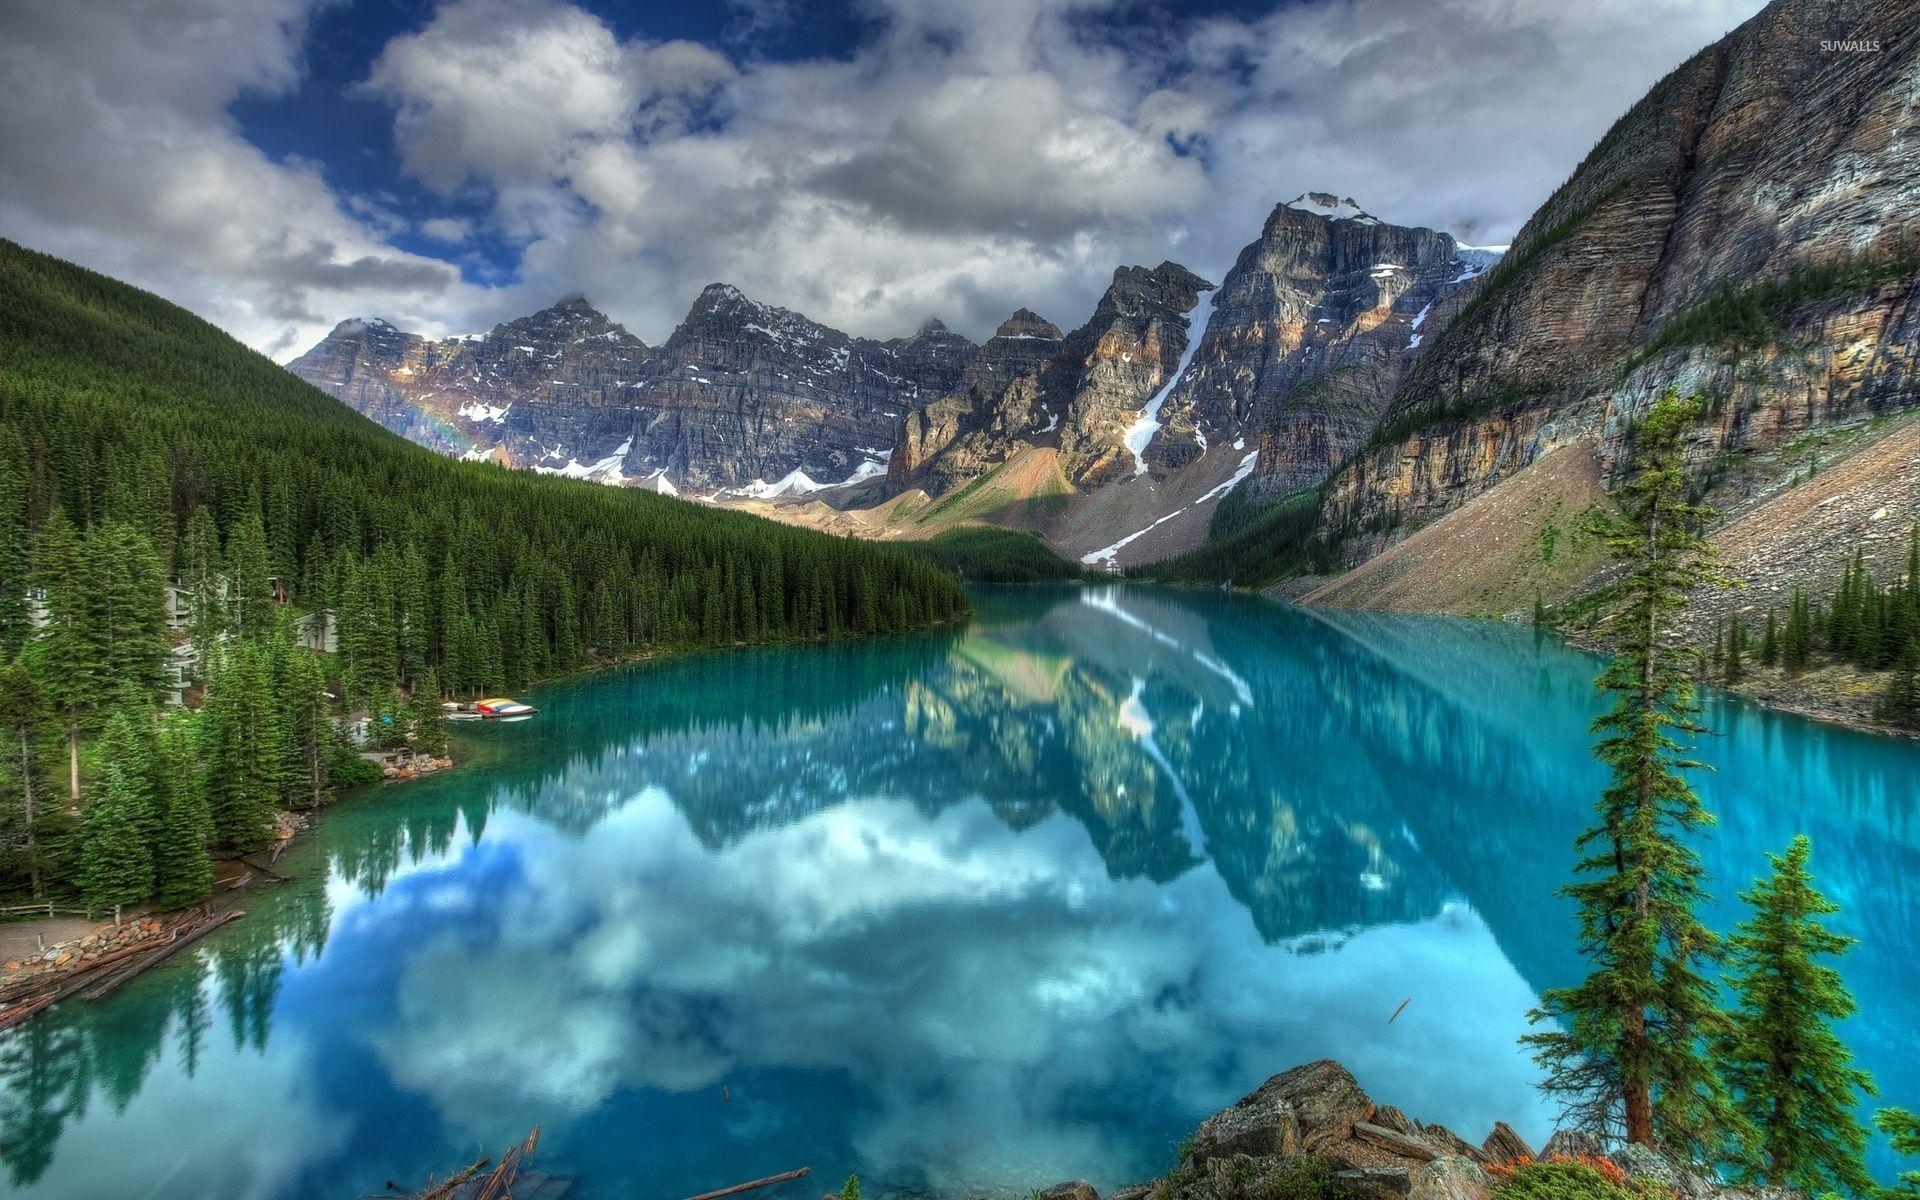 Turquoise lake in Banff National Park .suwalls.com